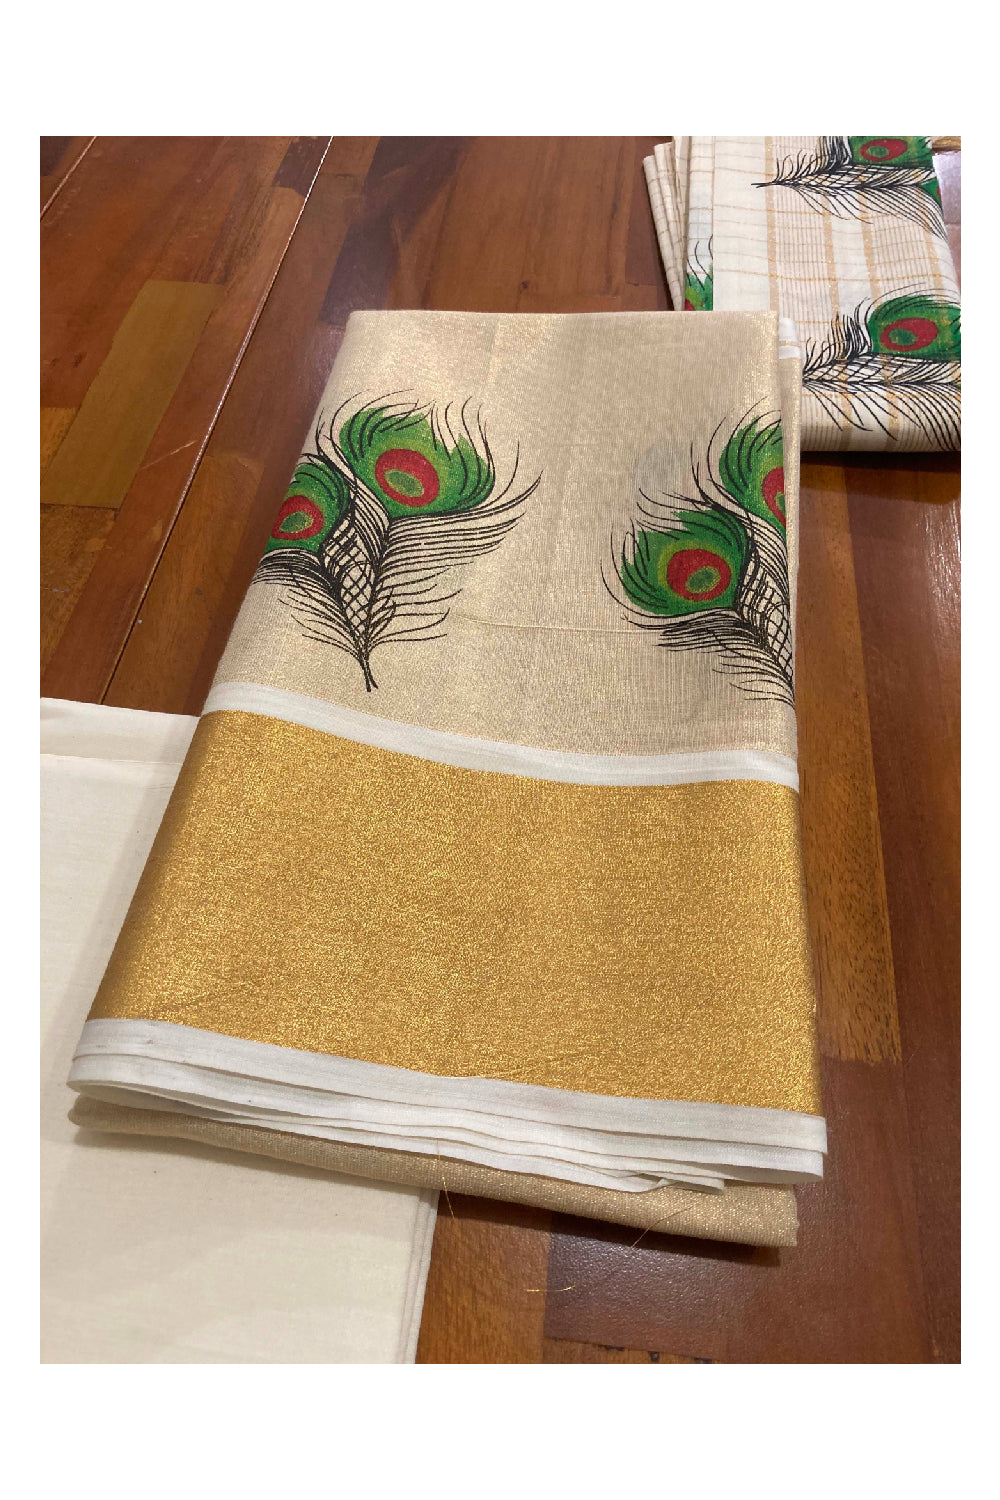 Kerala Tissue Kasavu Churidar Material with Peacock Feather Mural Design